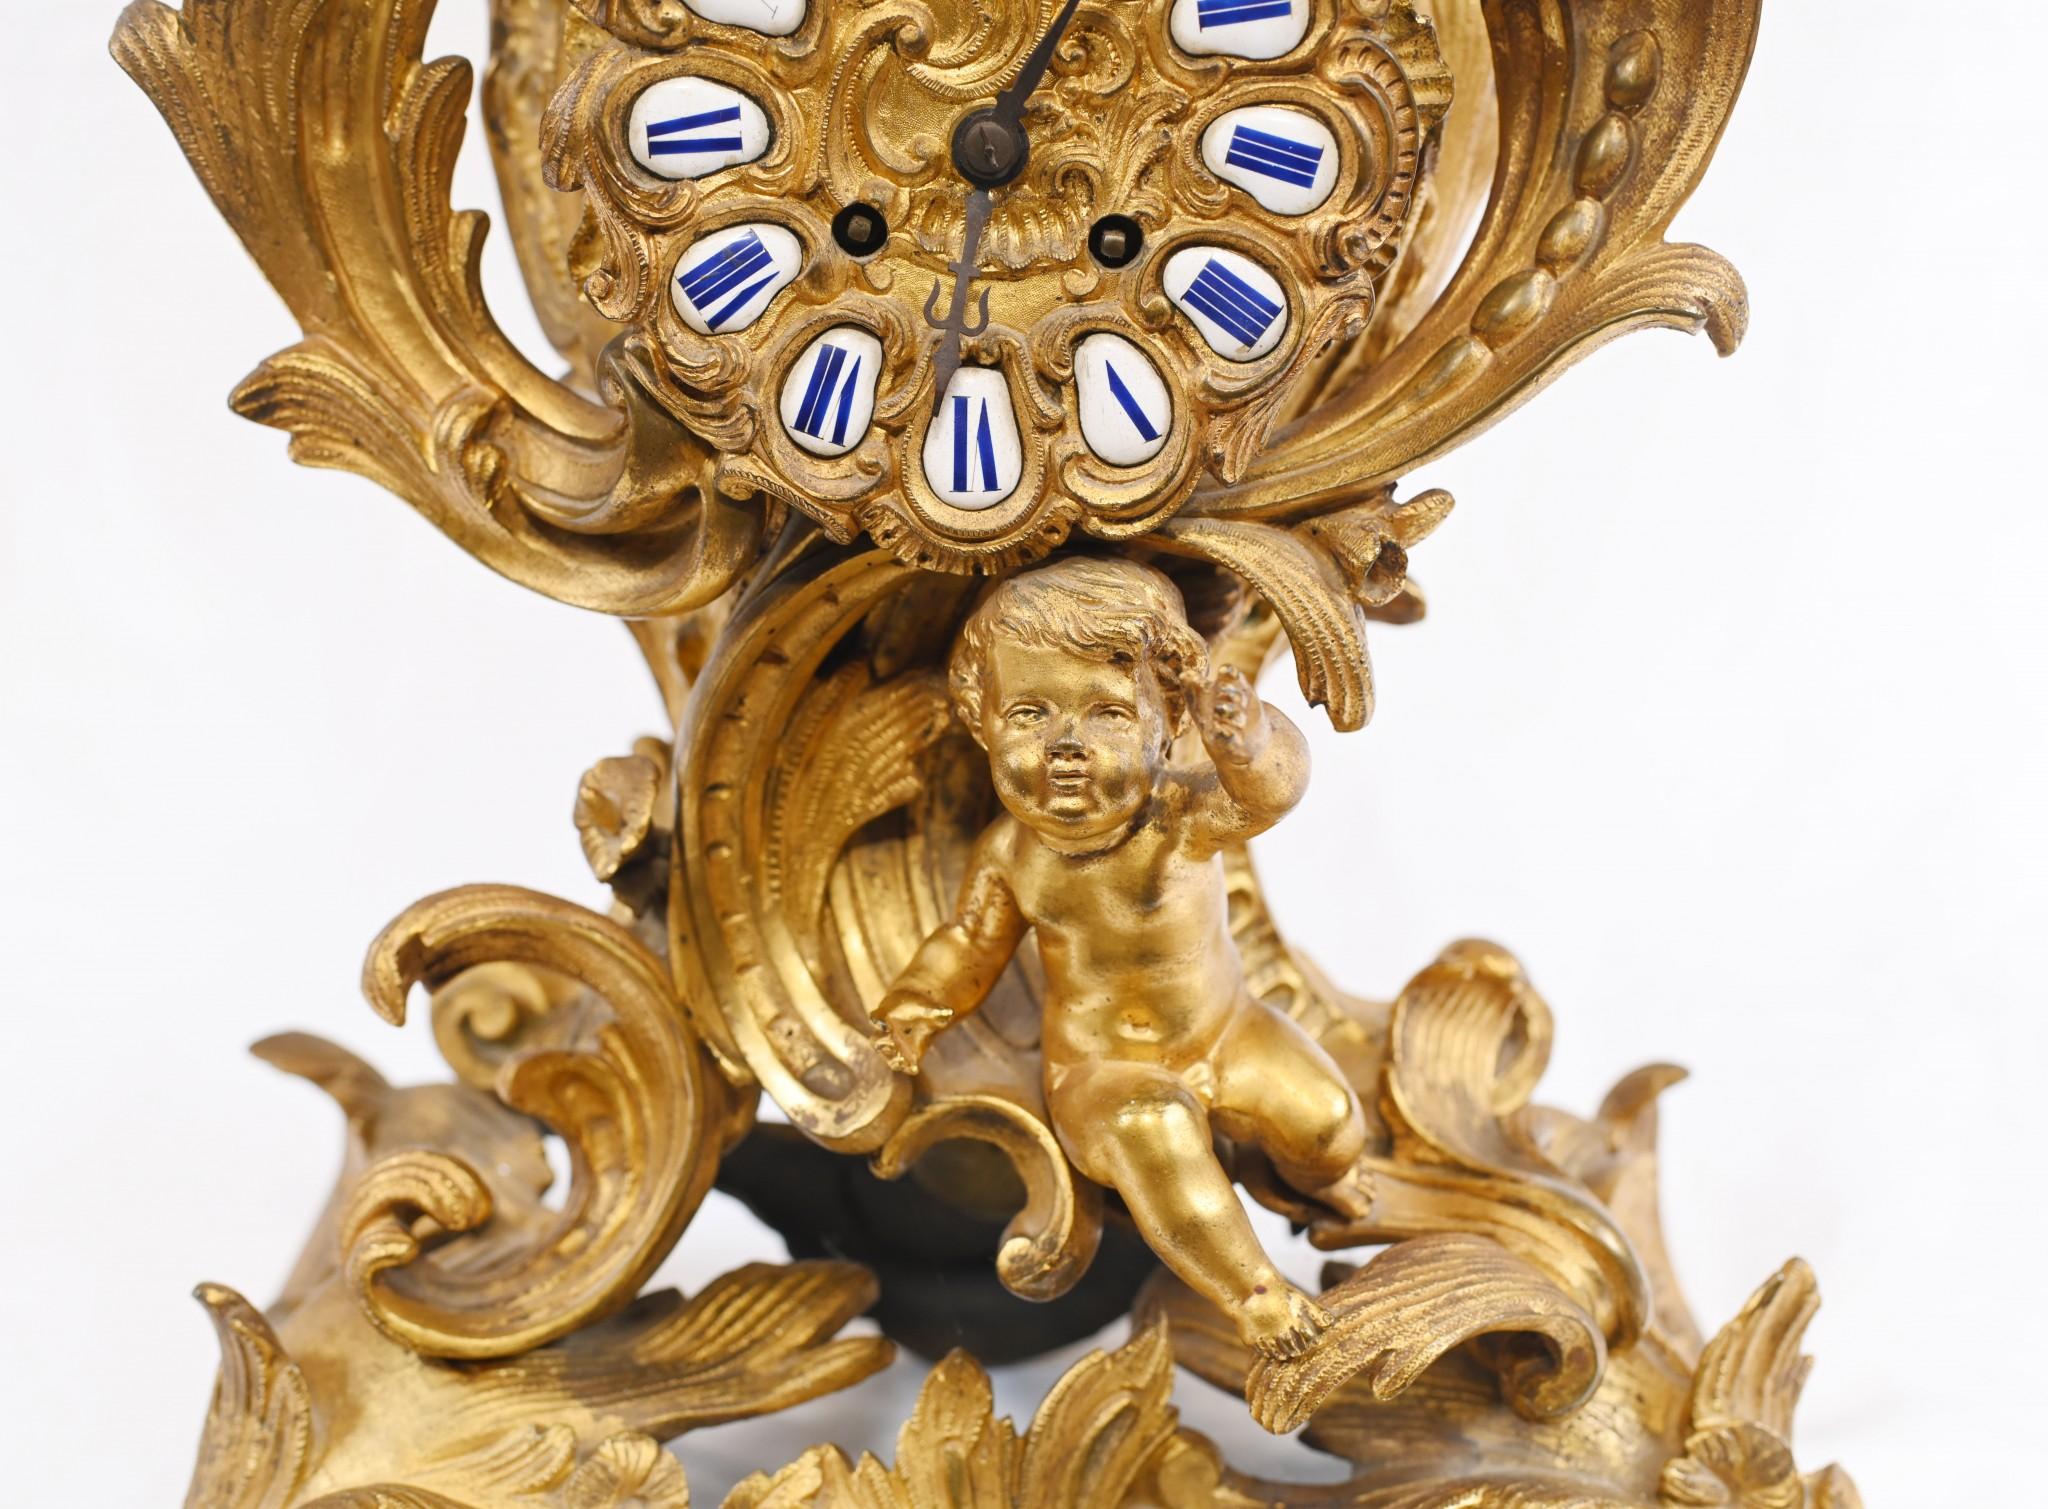 Late 19th Century French Rococo Mantle Clock Gilt Cherub, 1880